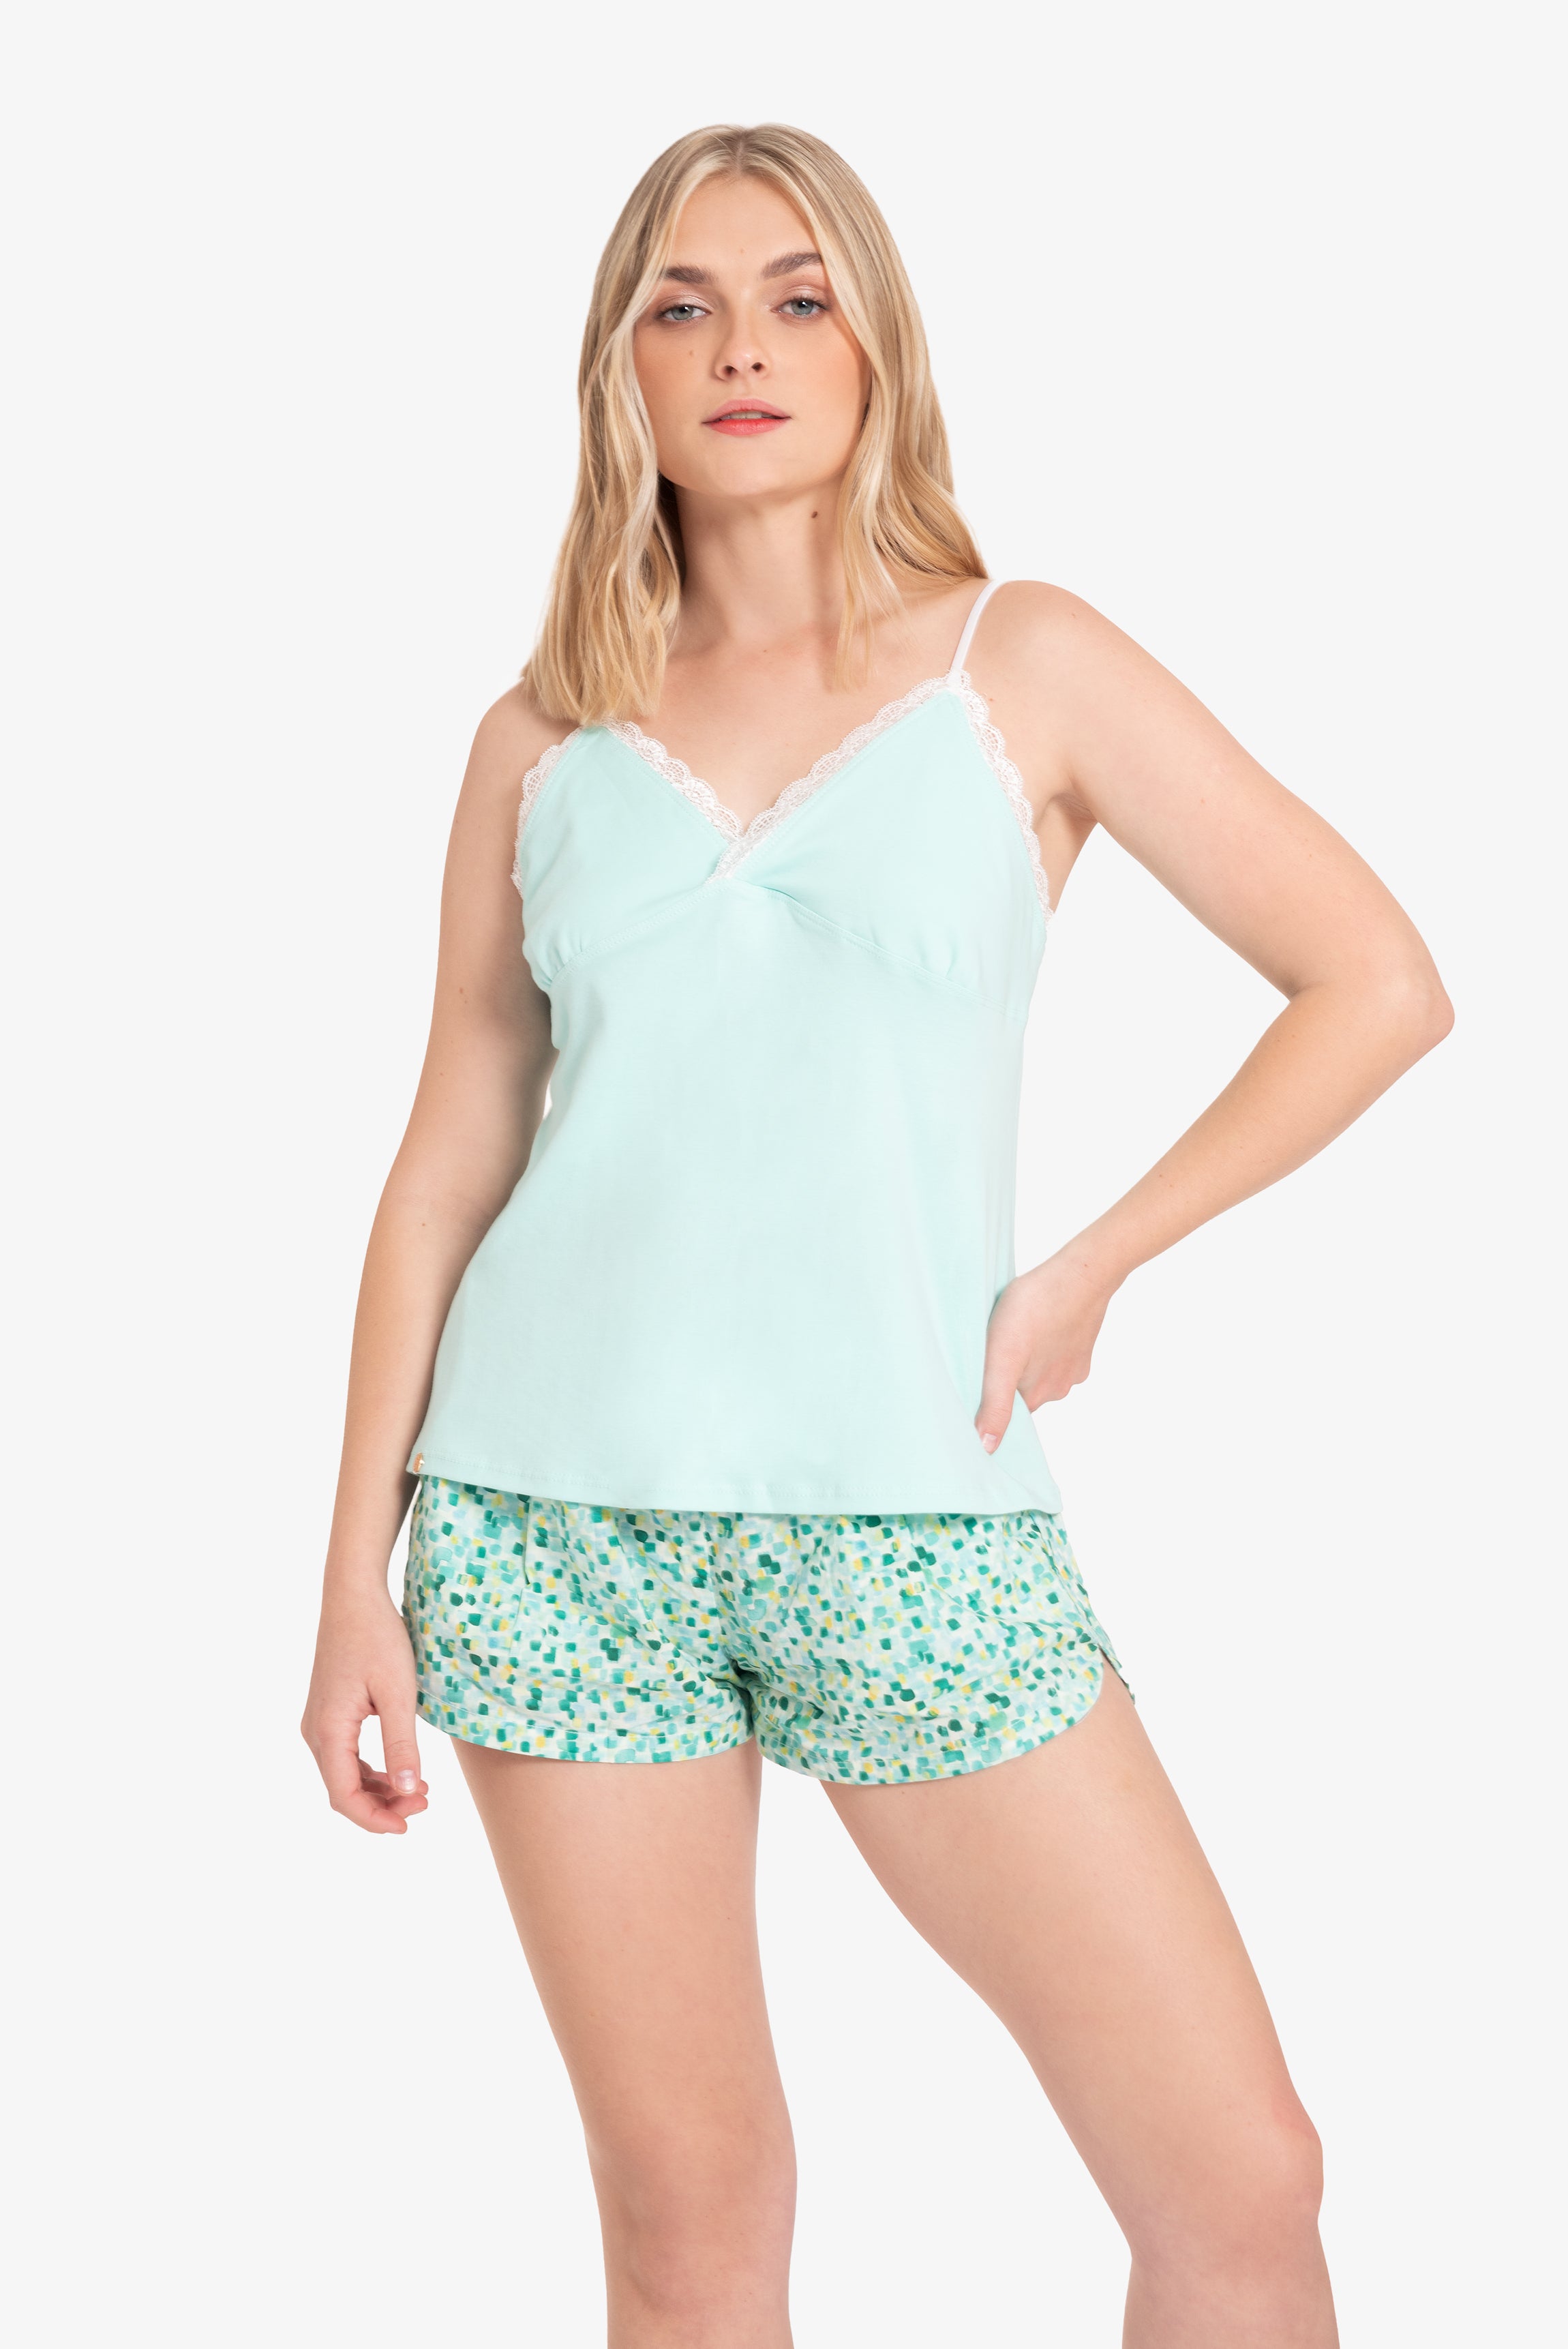 Pijama Set de algodón - Jade - Verde agua